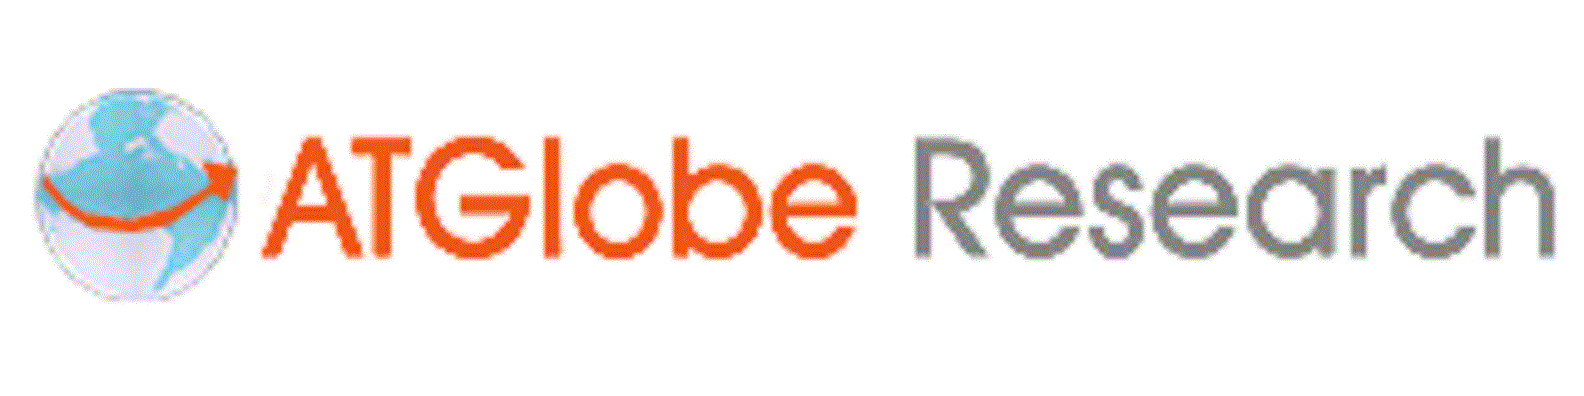 ATGlobe Research Logo